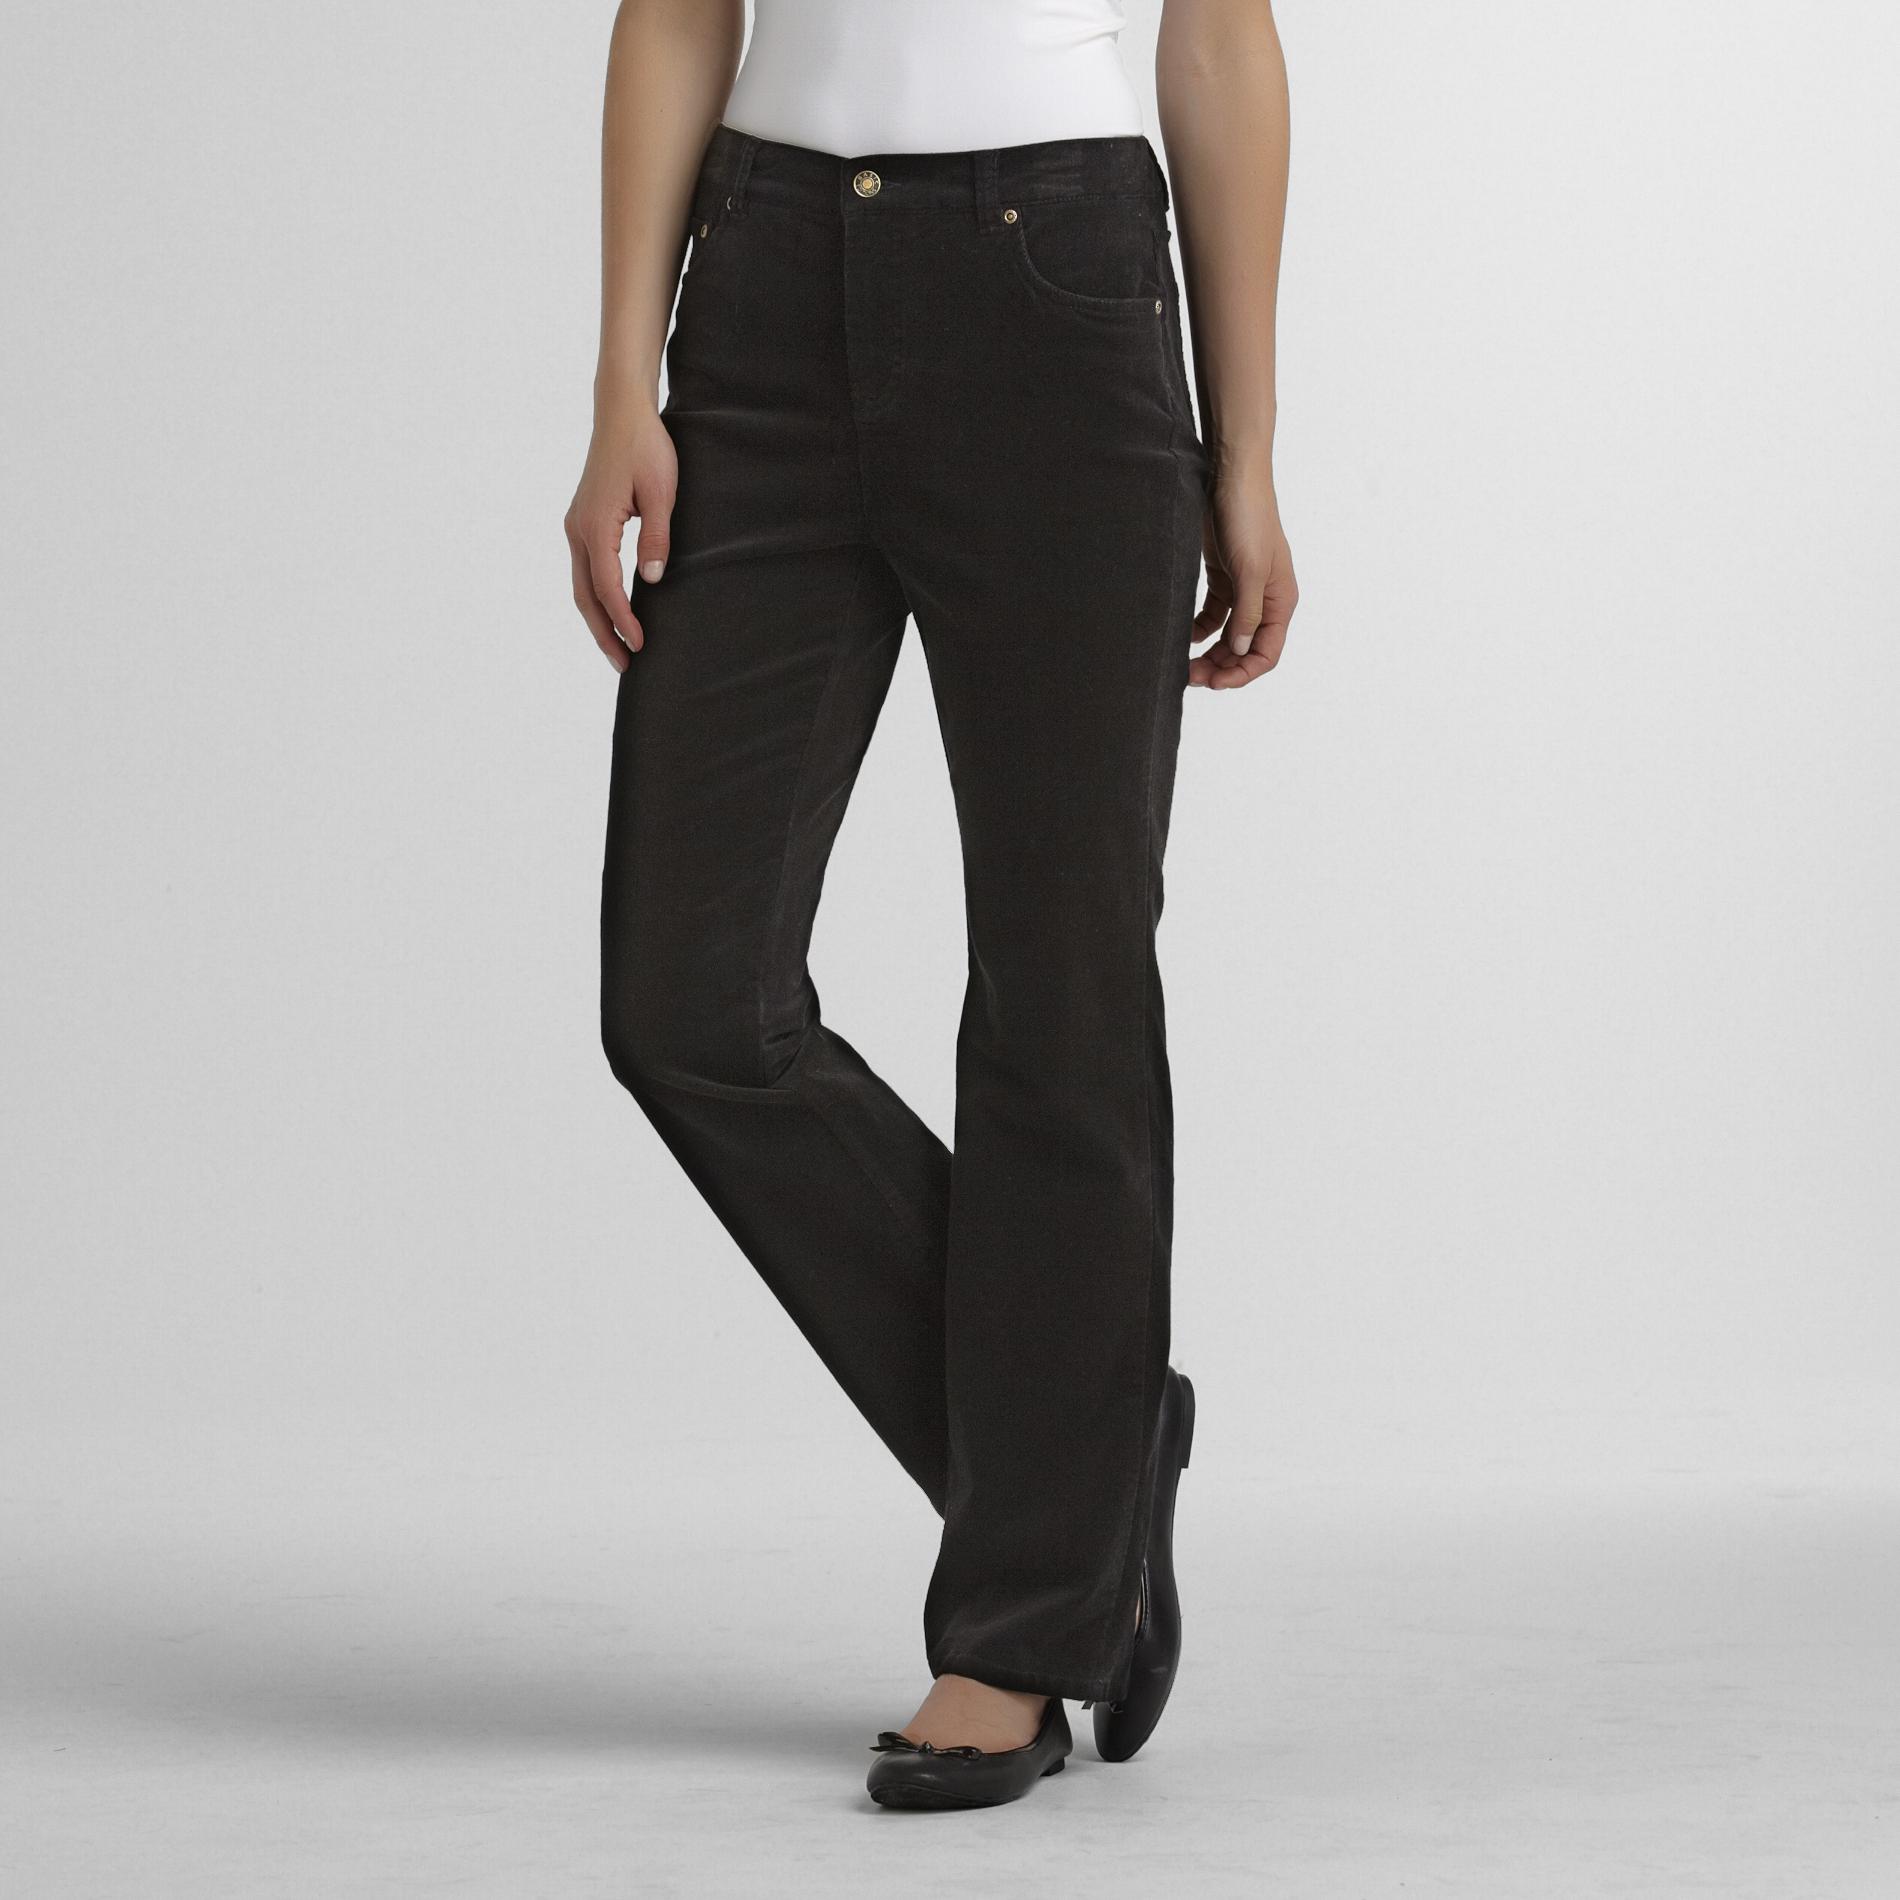 Basic Editions Women's Corduroy Pants